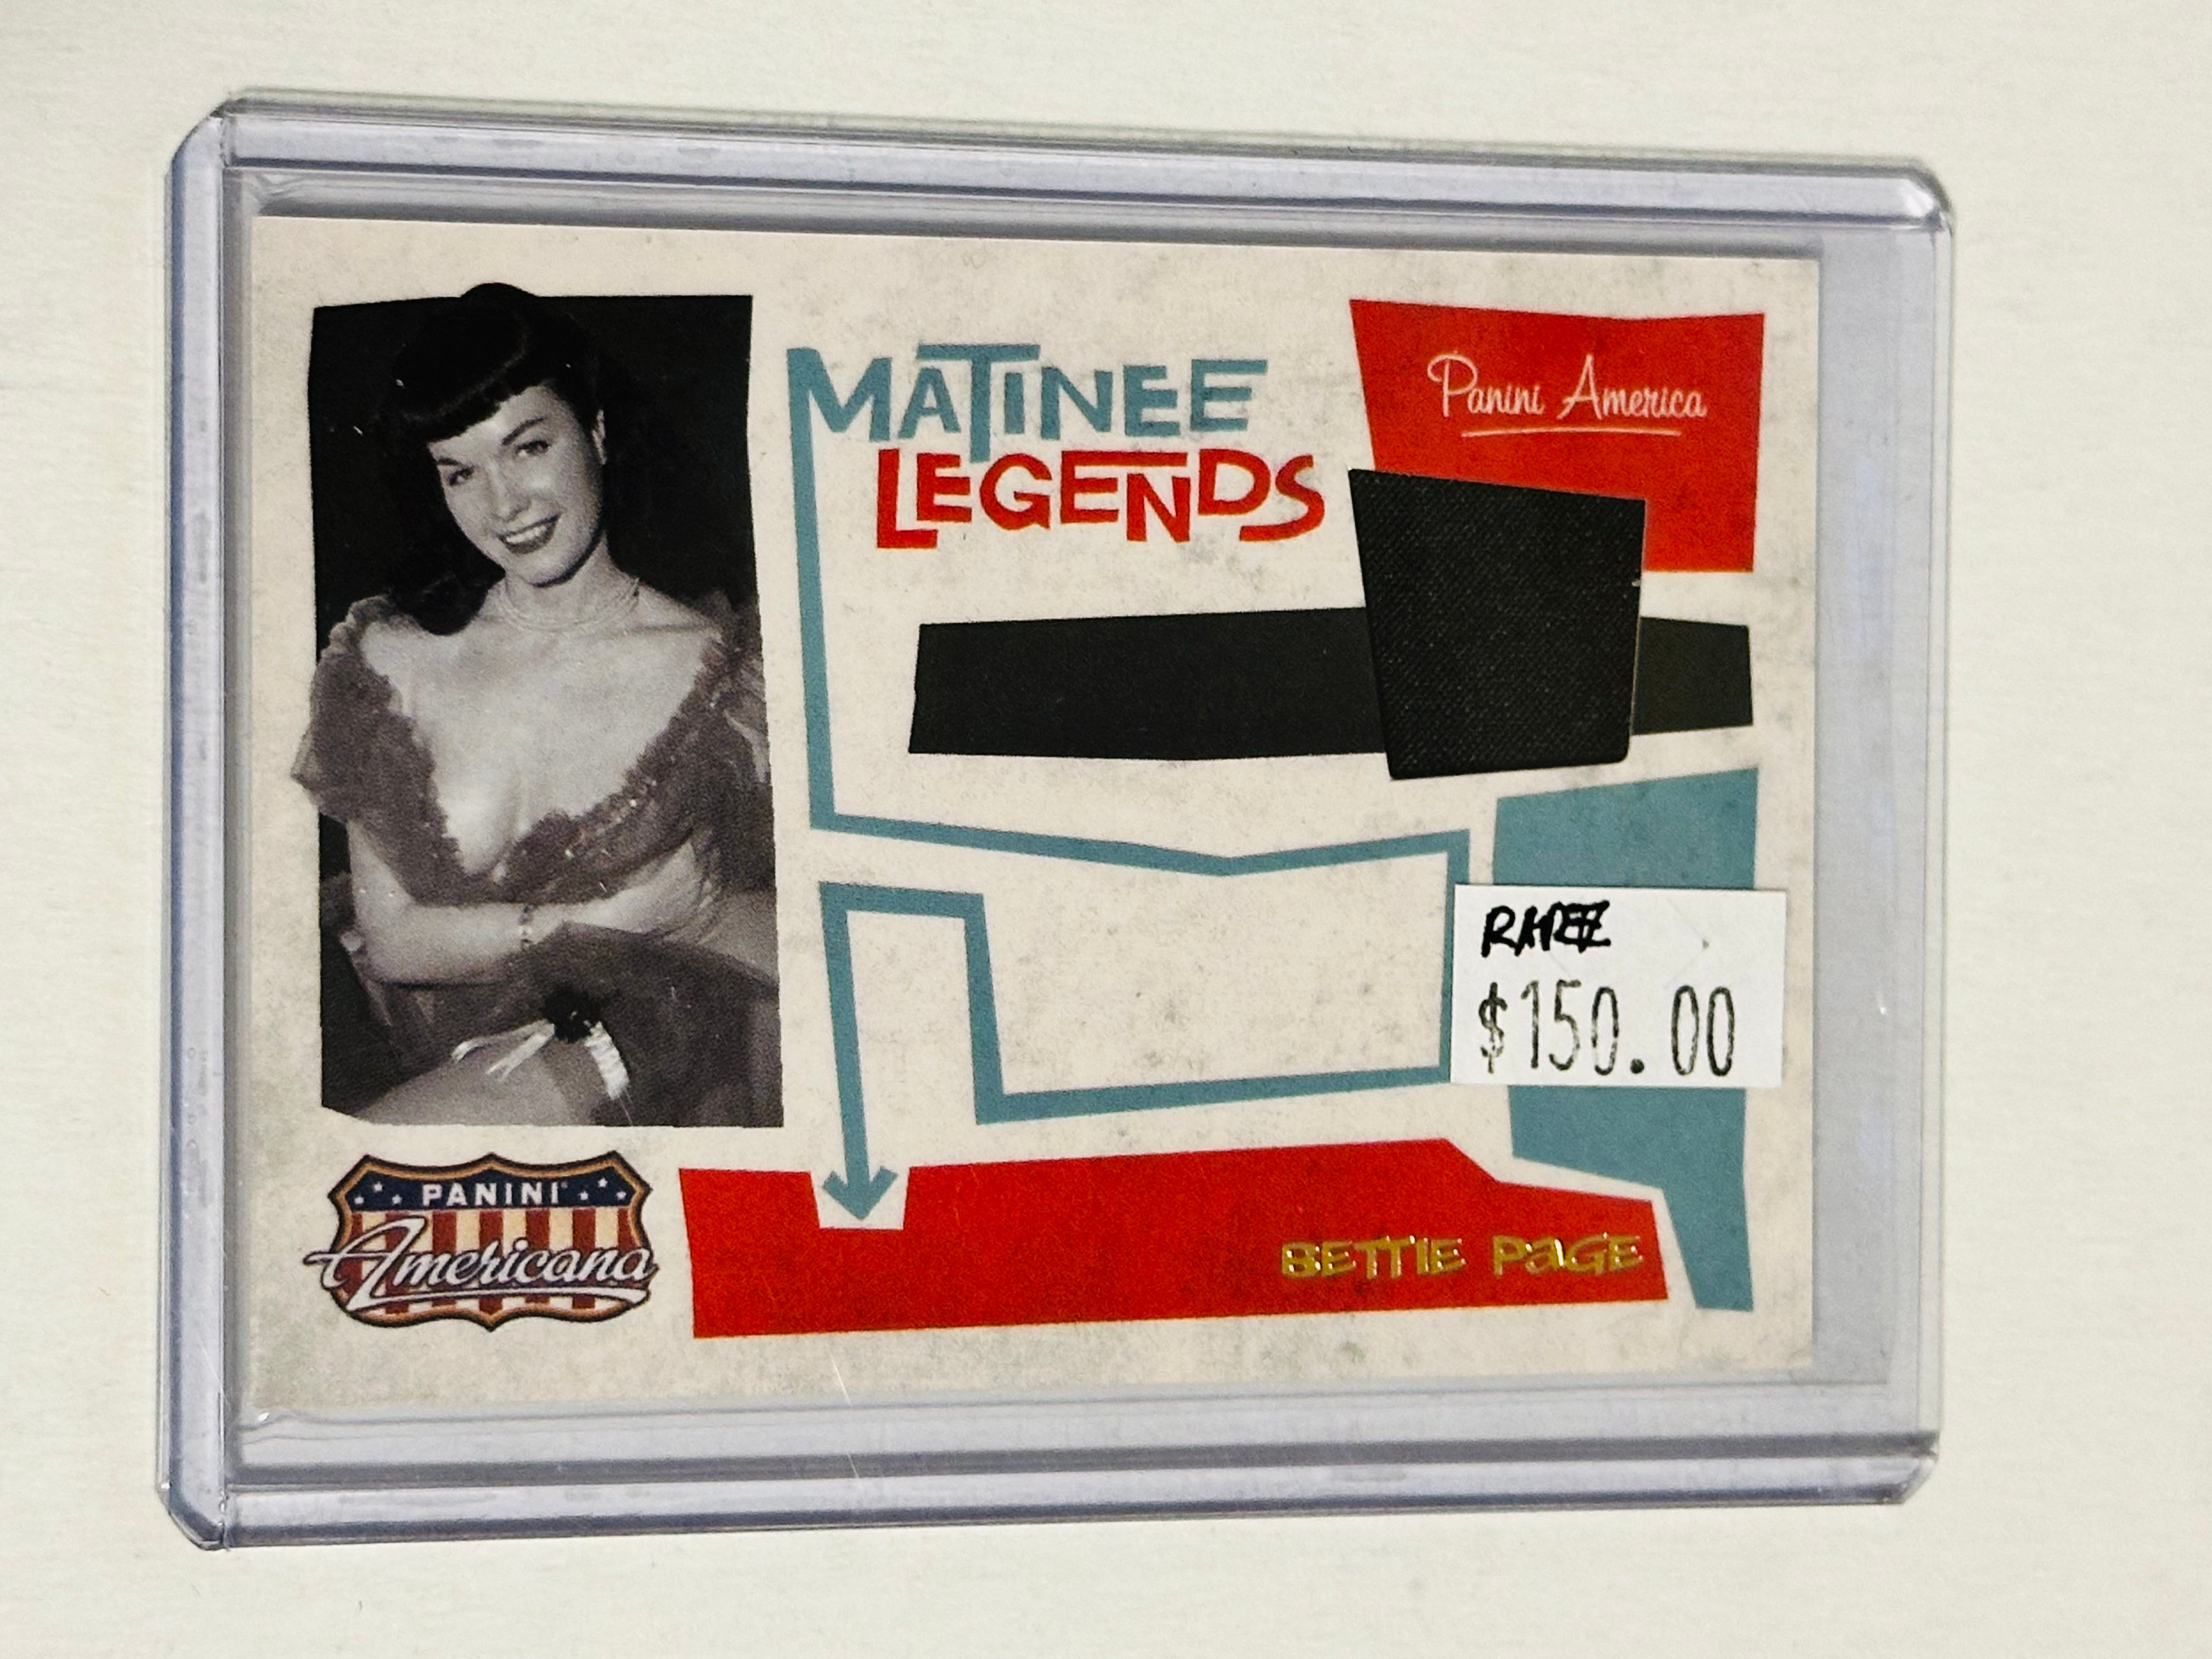 Bettie Page famous Pin-up girl legend rare memorabilia insert card